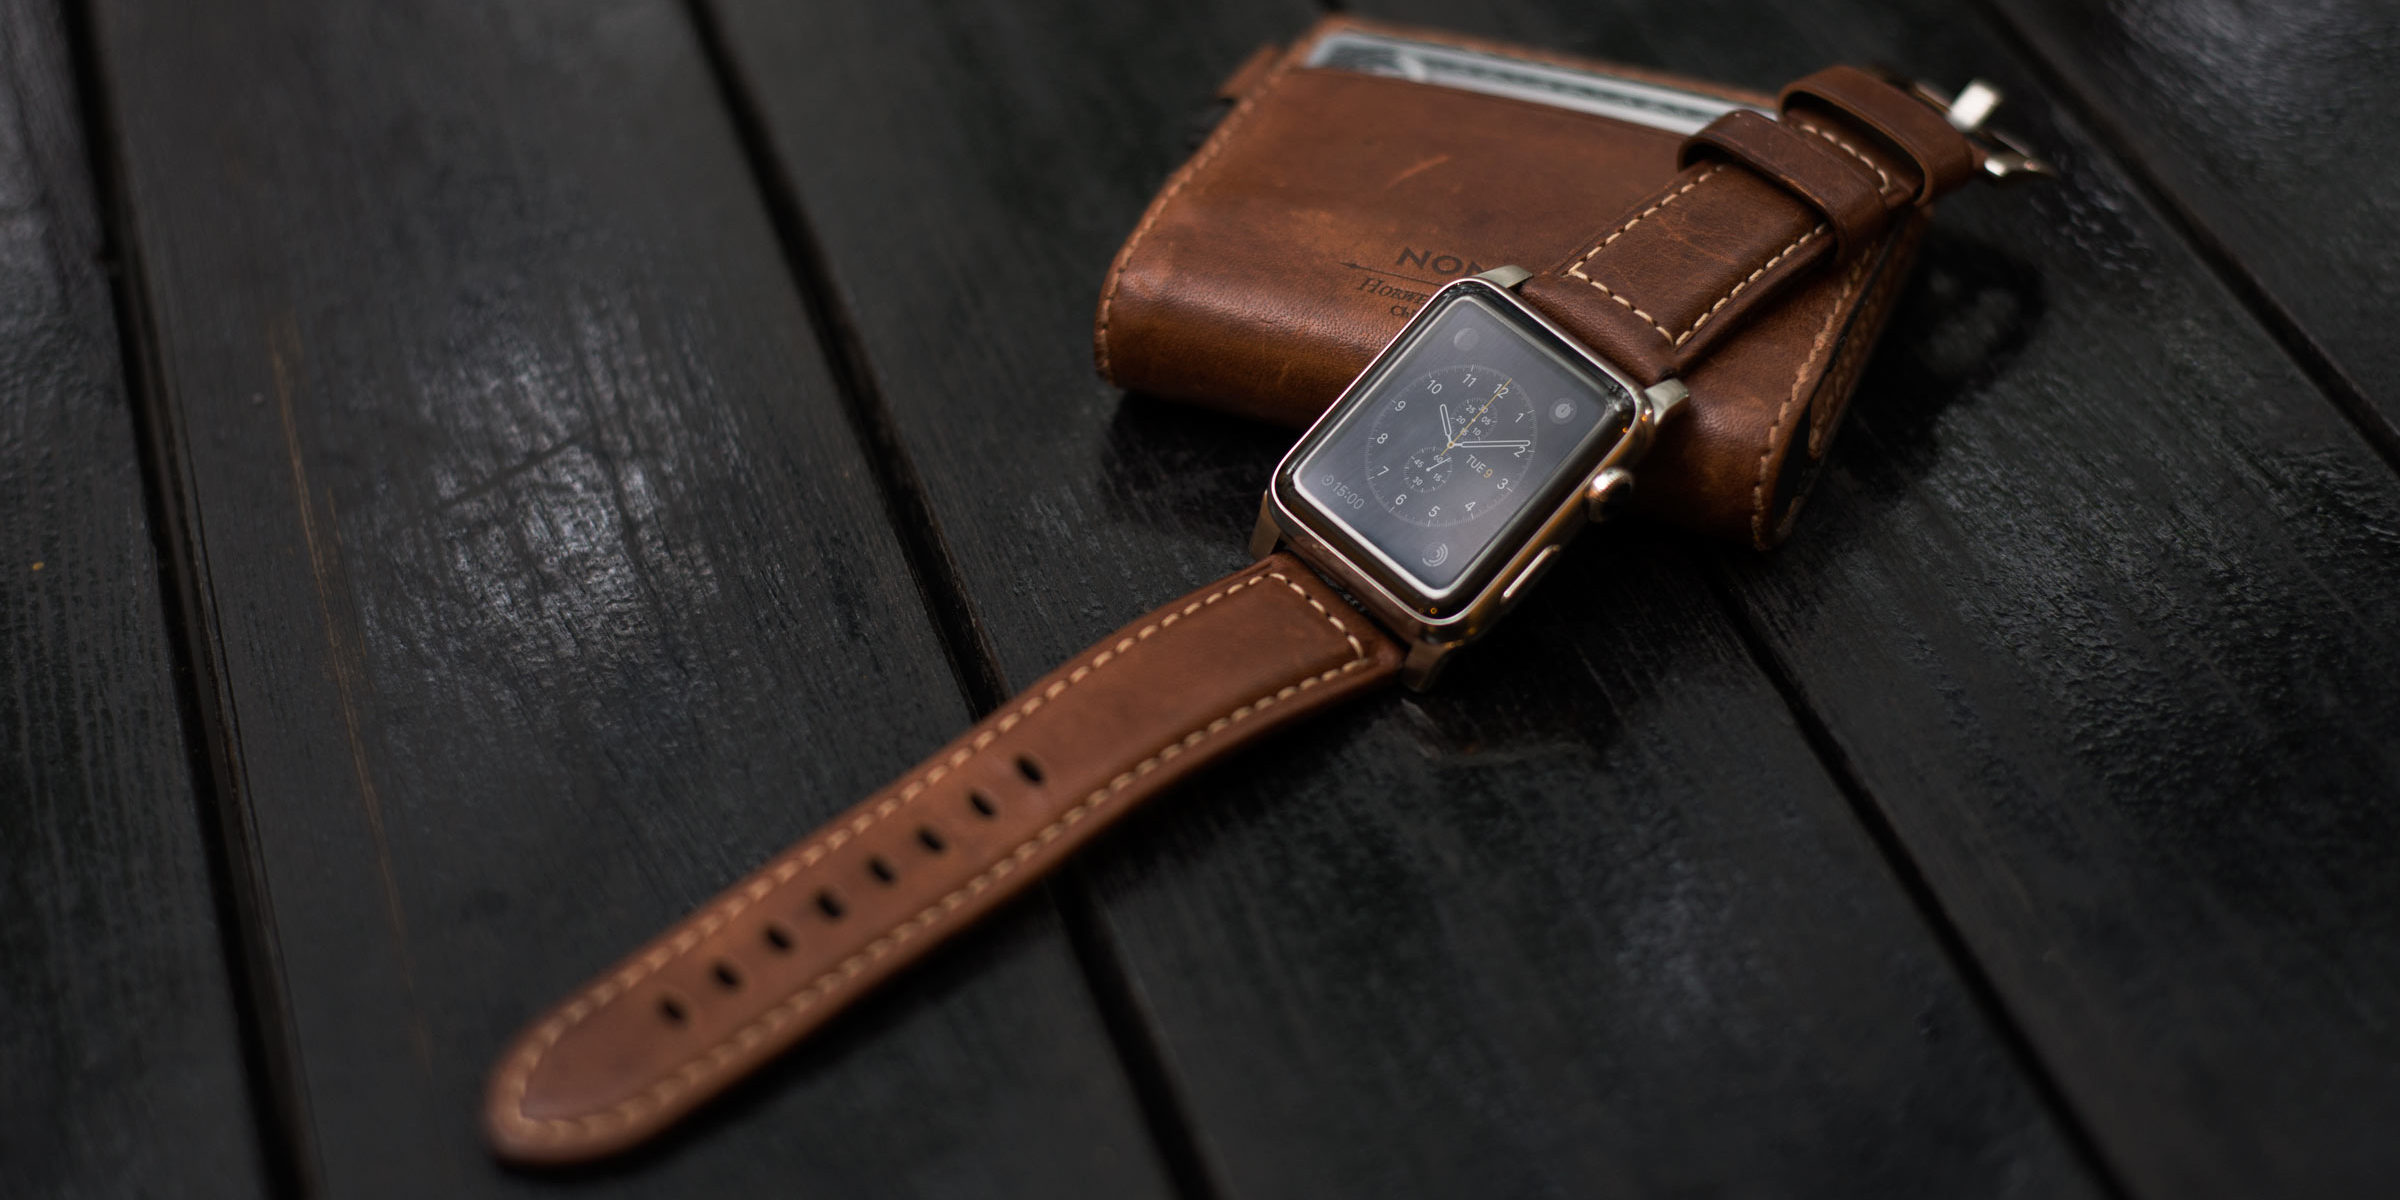 Apple watch strap. Кожаный ремешок для Эппл вотч. Ремешок эпл вотч кожа. Nomad Horween Leather Strap. Кожаные ремешки Nomad для Apple watch.